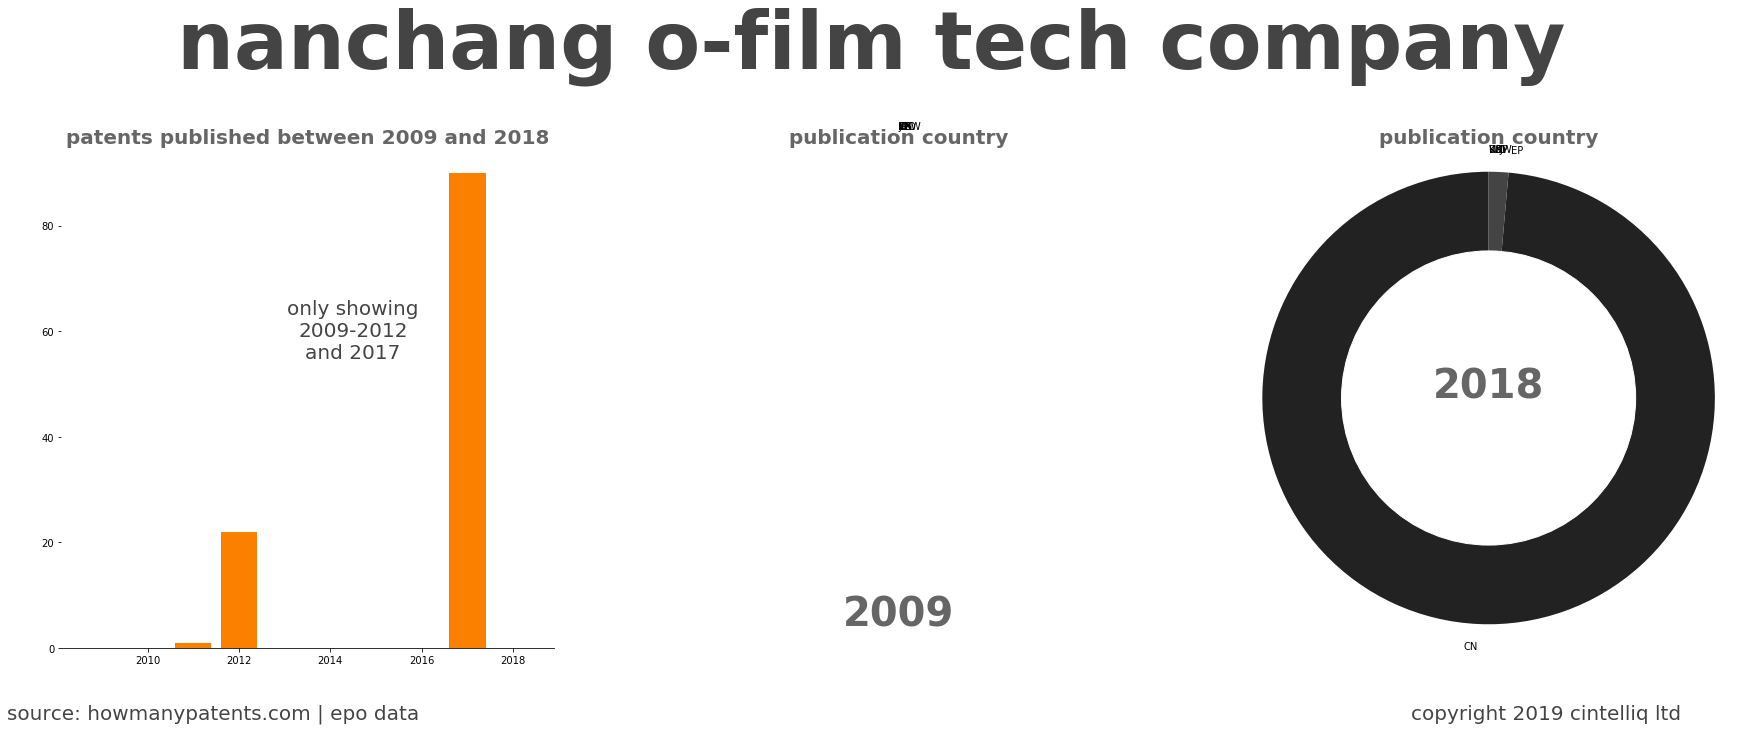 summary of patents for Nanchang O-Film Tech Company